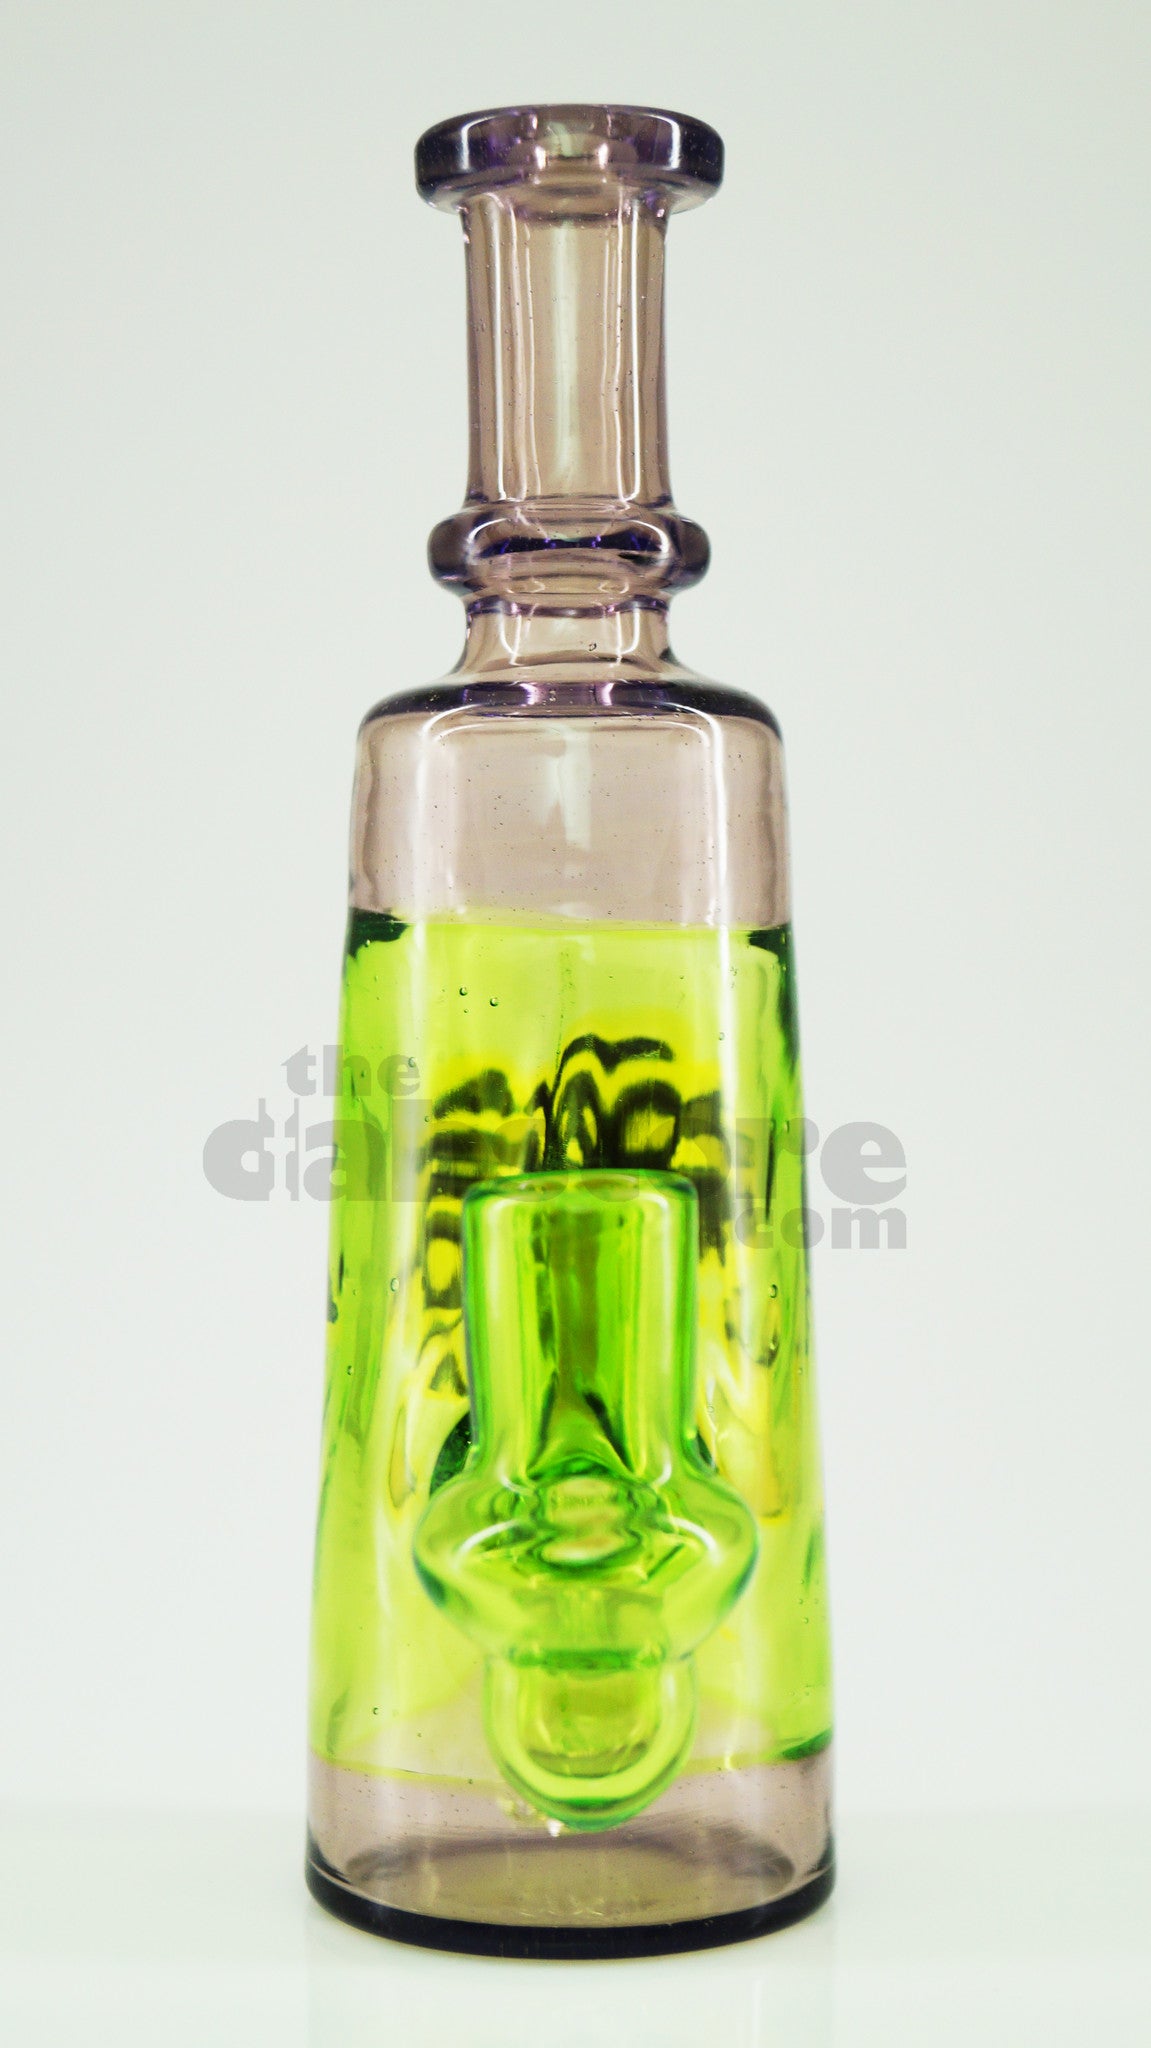 Illuminati Glass Bottle Puffco Peak Attachment (Assorted Colors